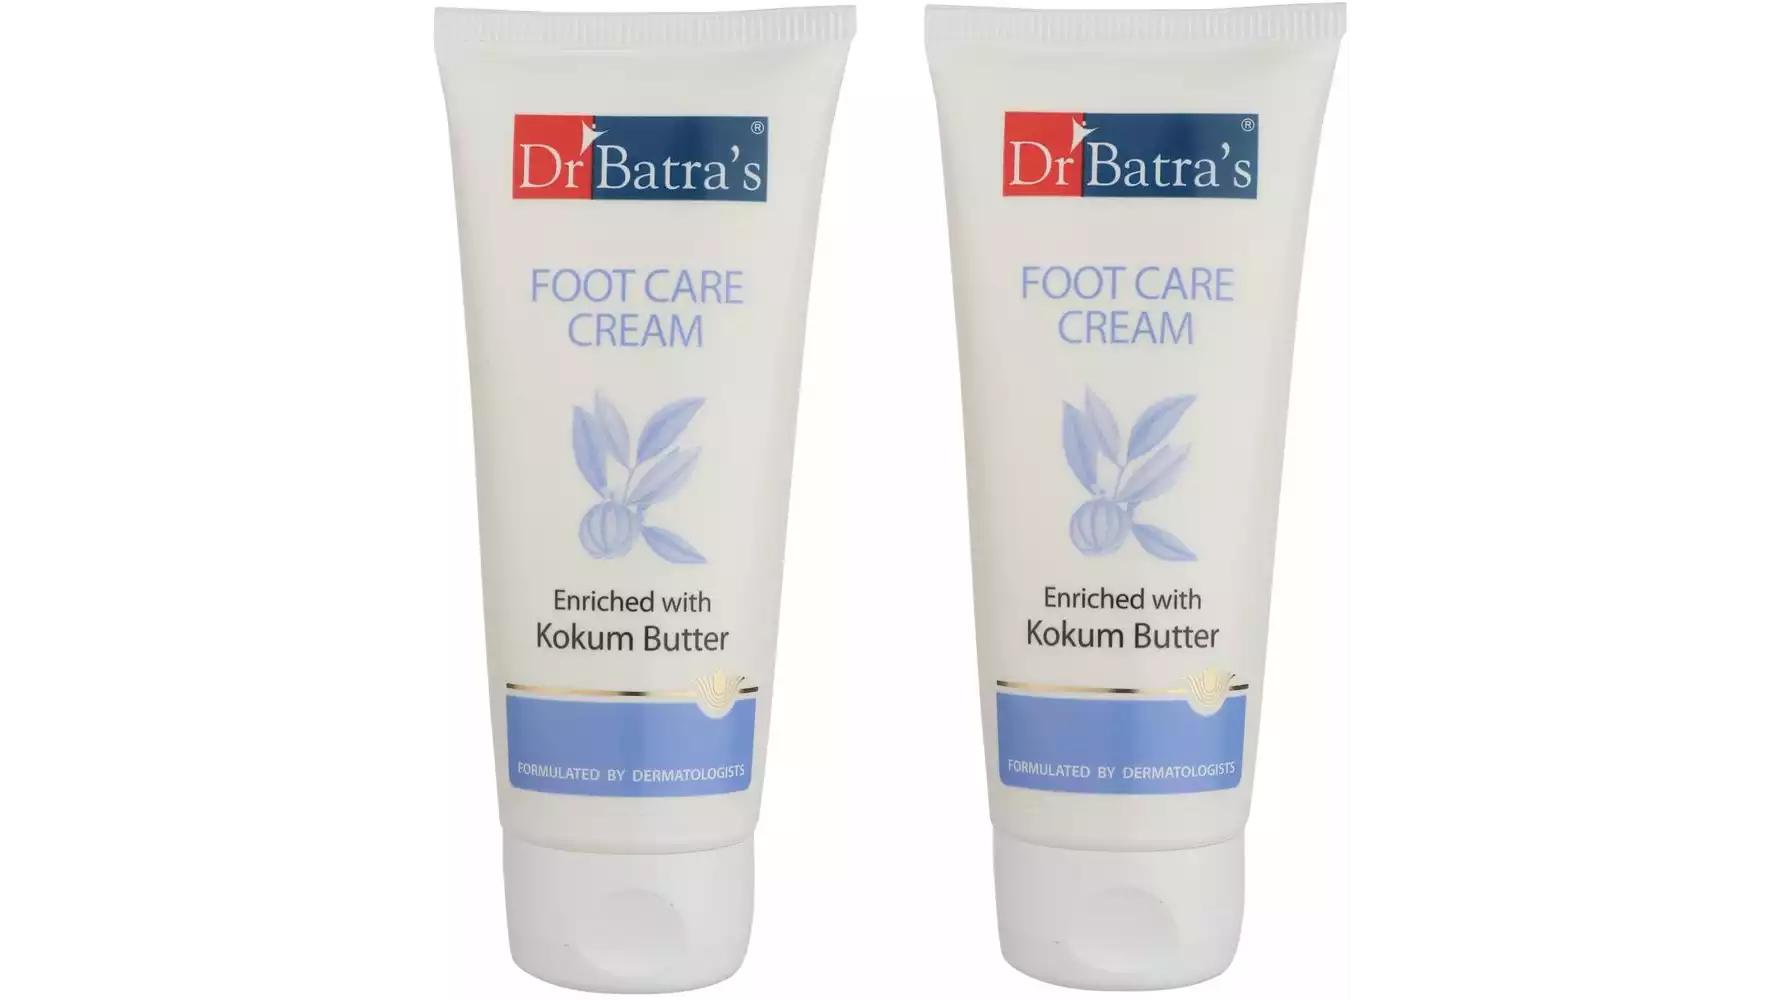 Dr Batras Foot Care Cream (100g, Pack of 2)